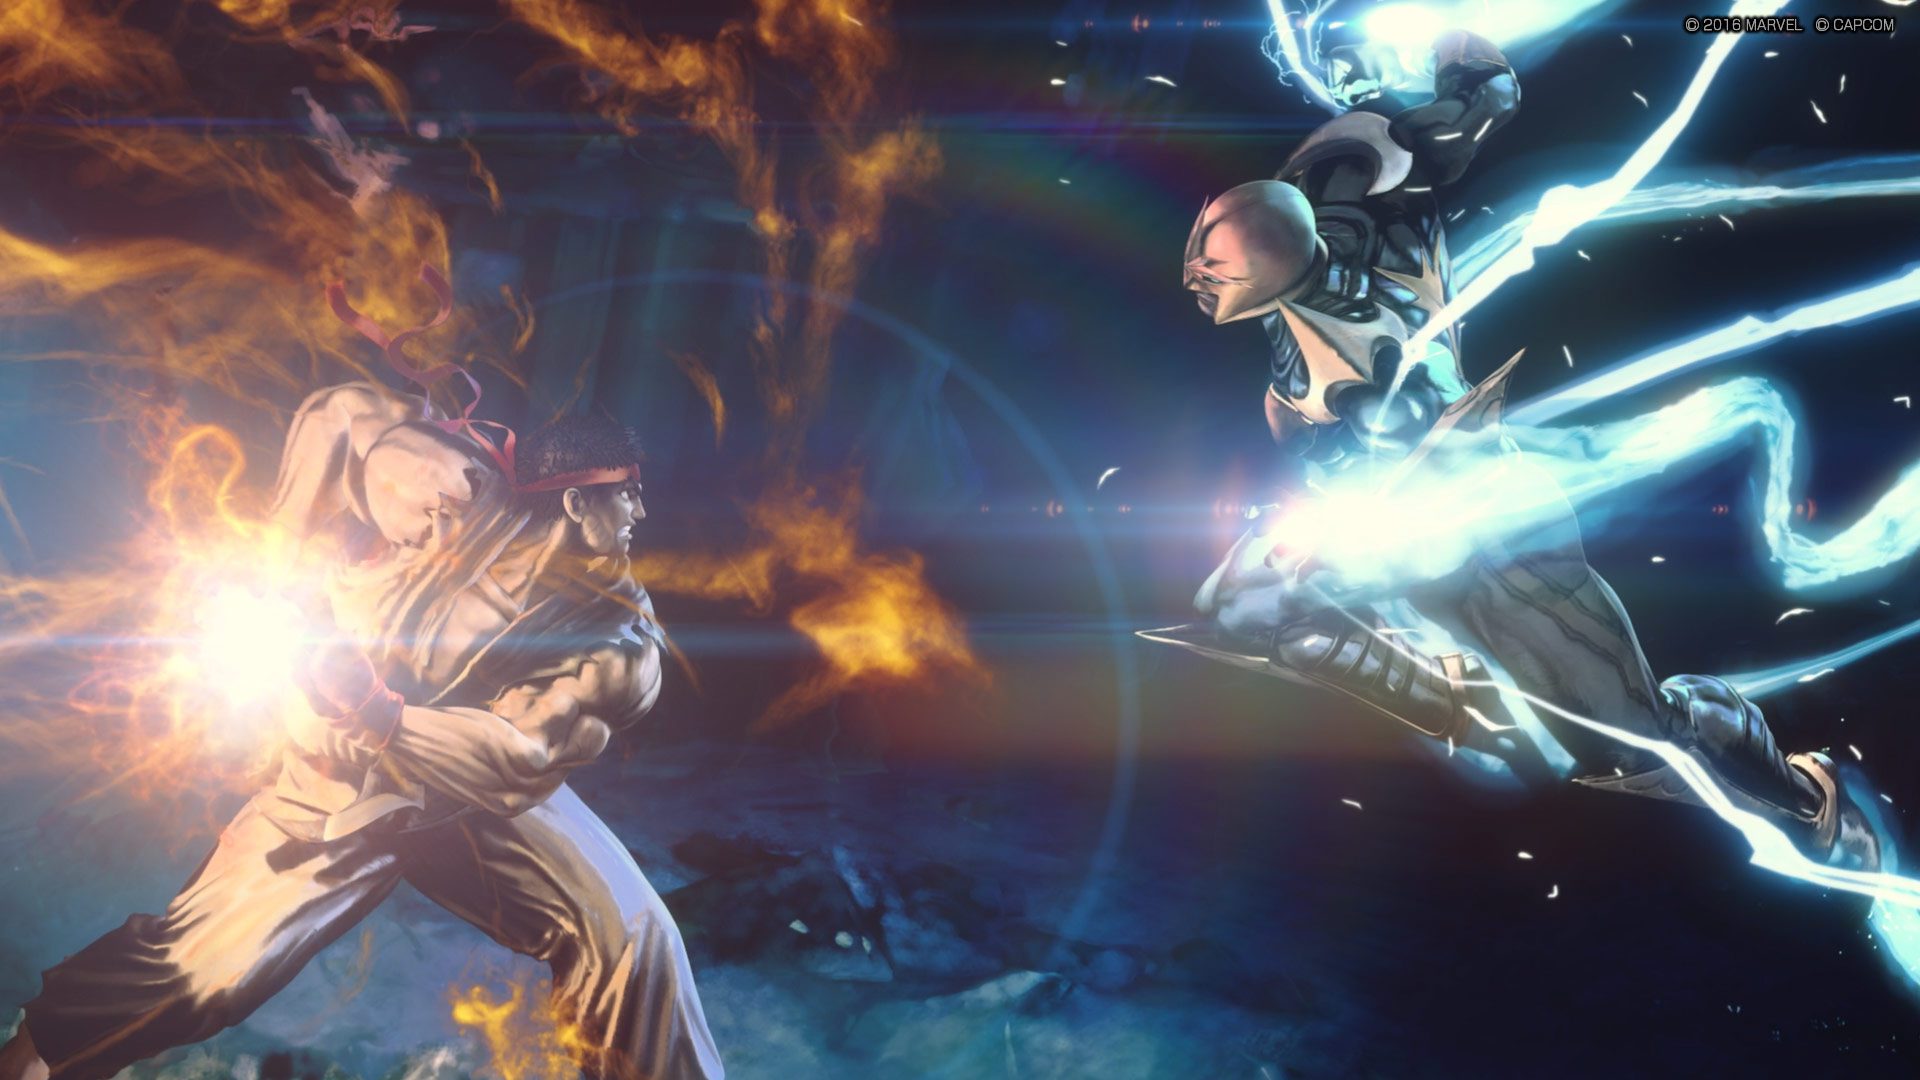 Ultimate Marvel vs. Capcom 3 finally arrives on PC March 7th